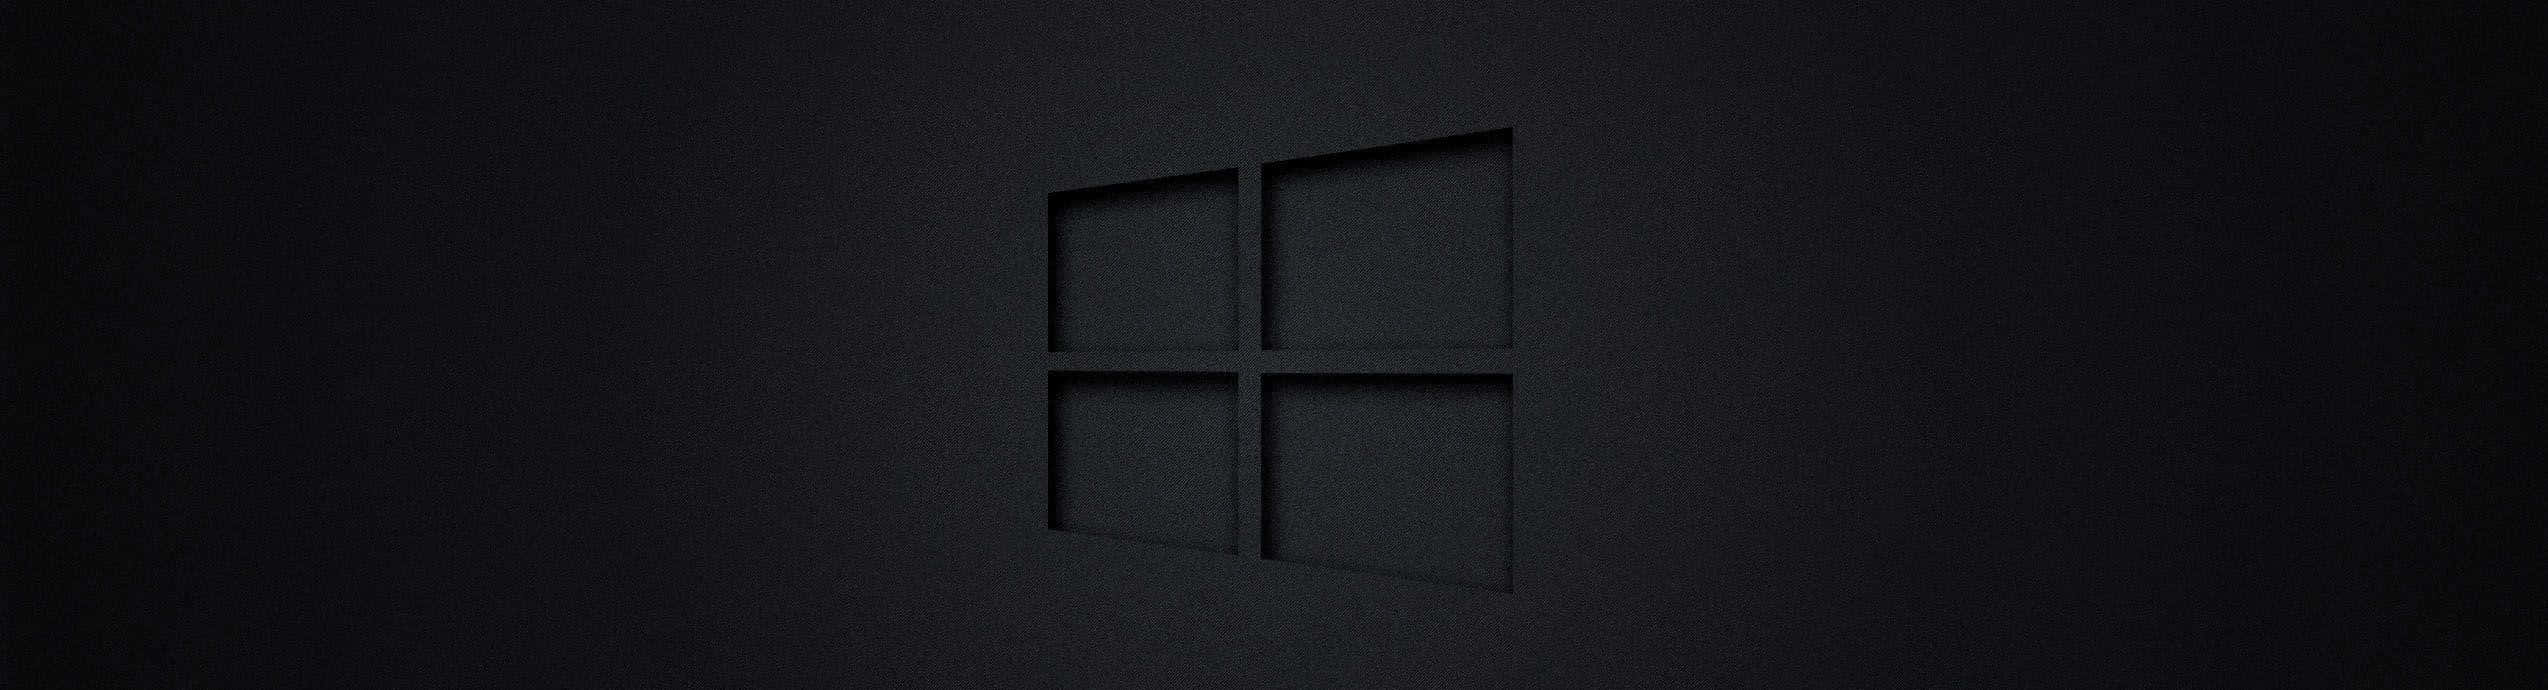 Dual Windows Background